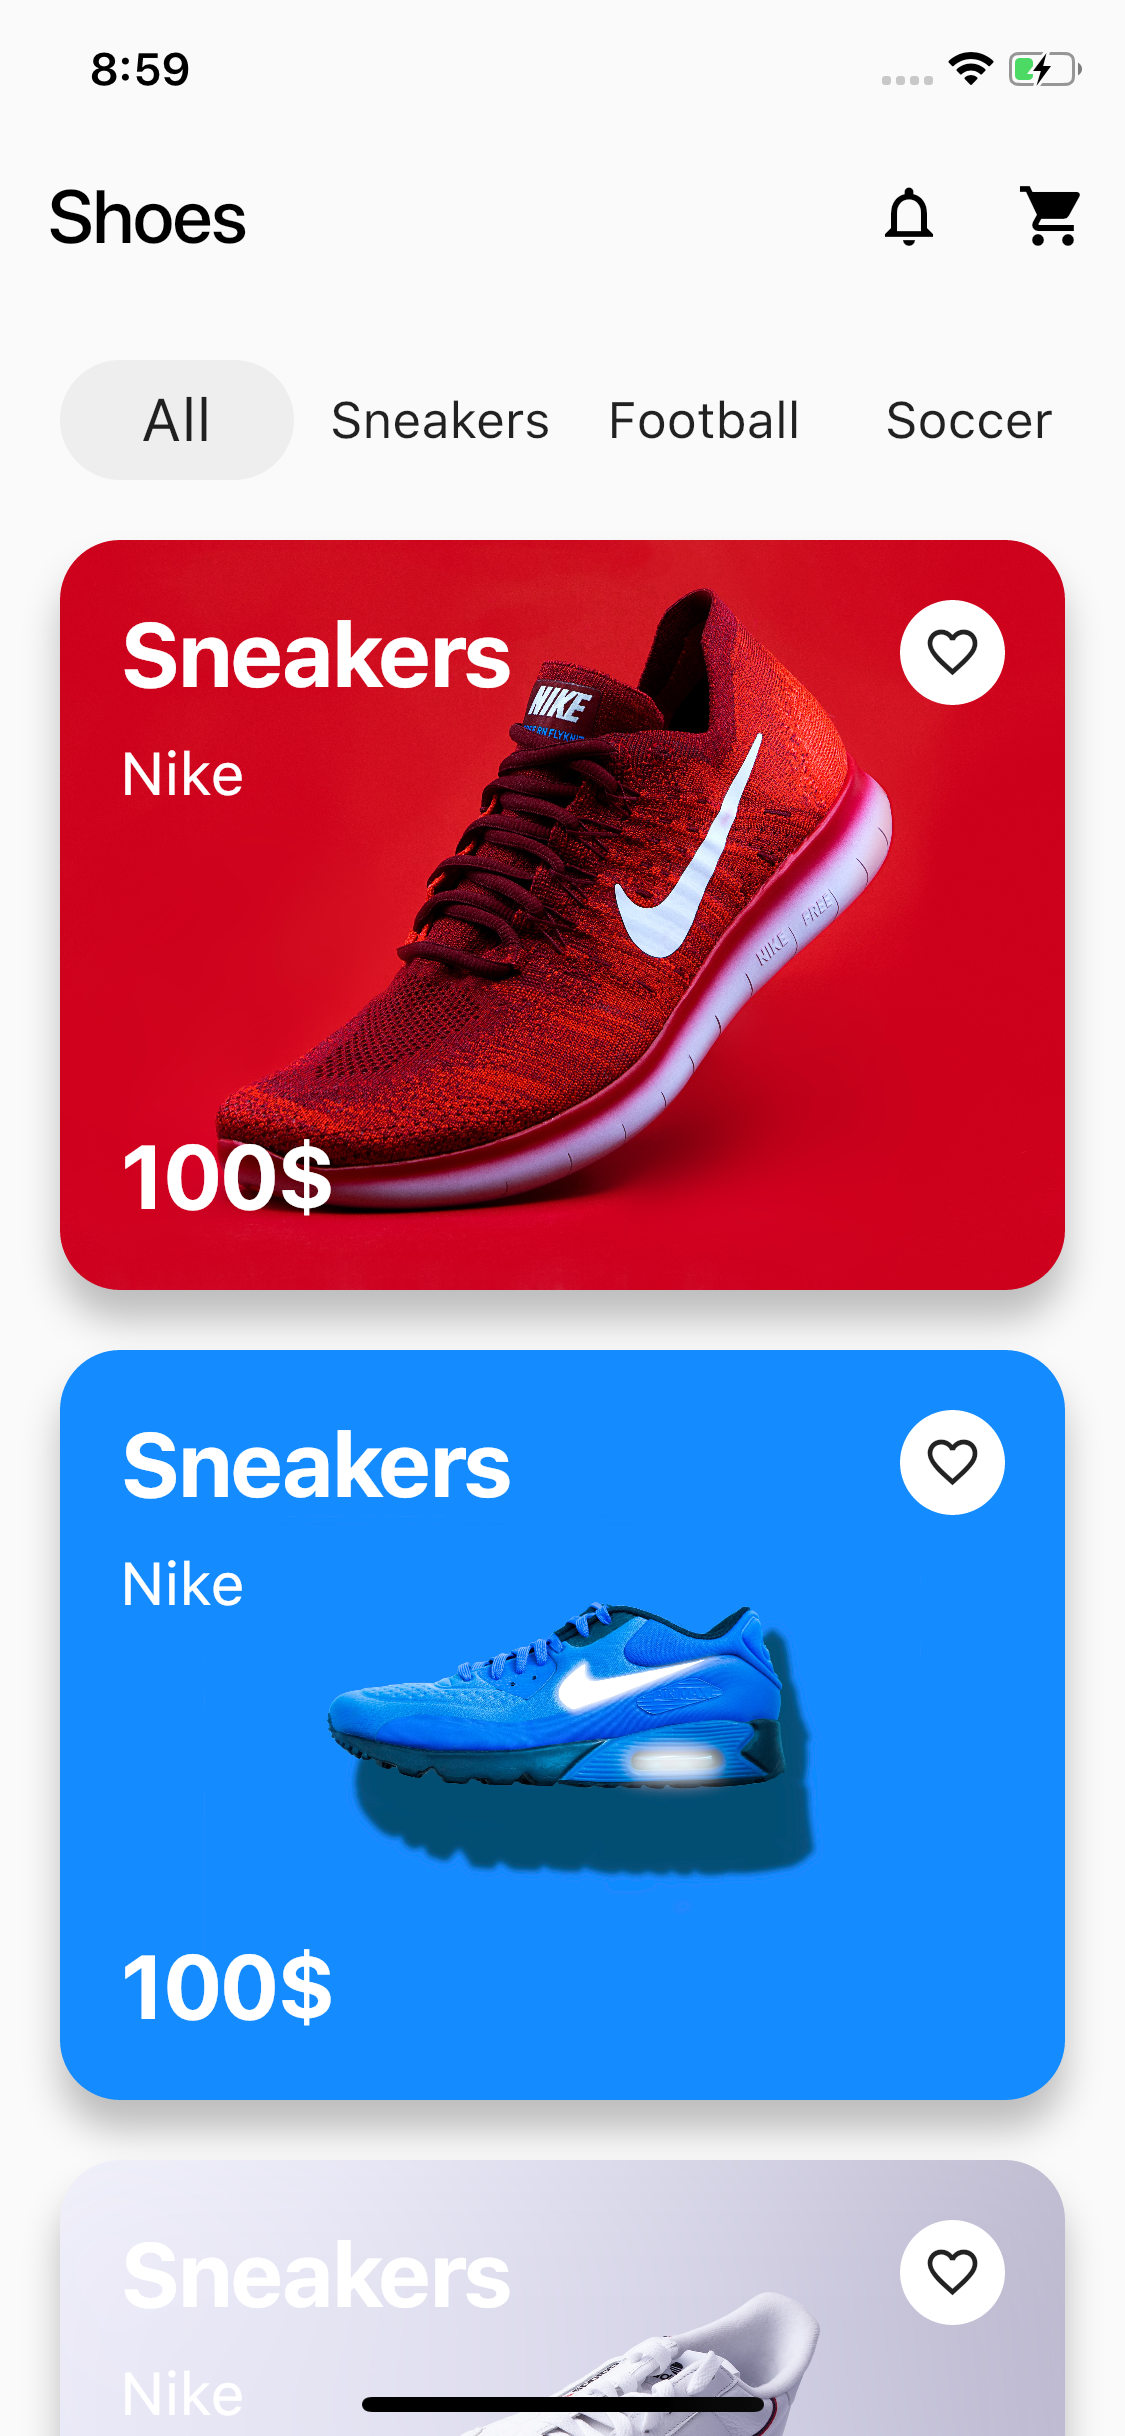 Flutter Nike Shoes Shop Application UI Design and Animation